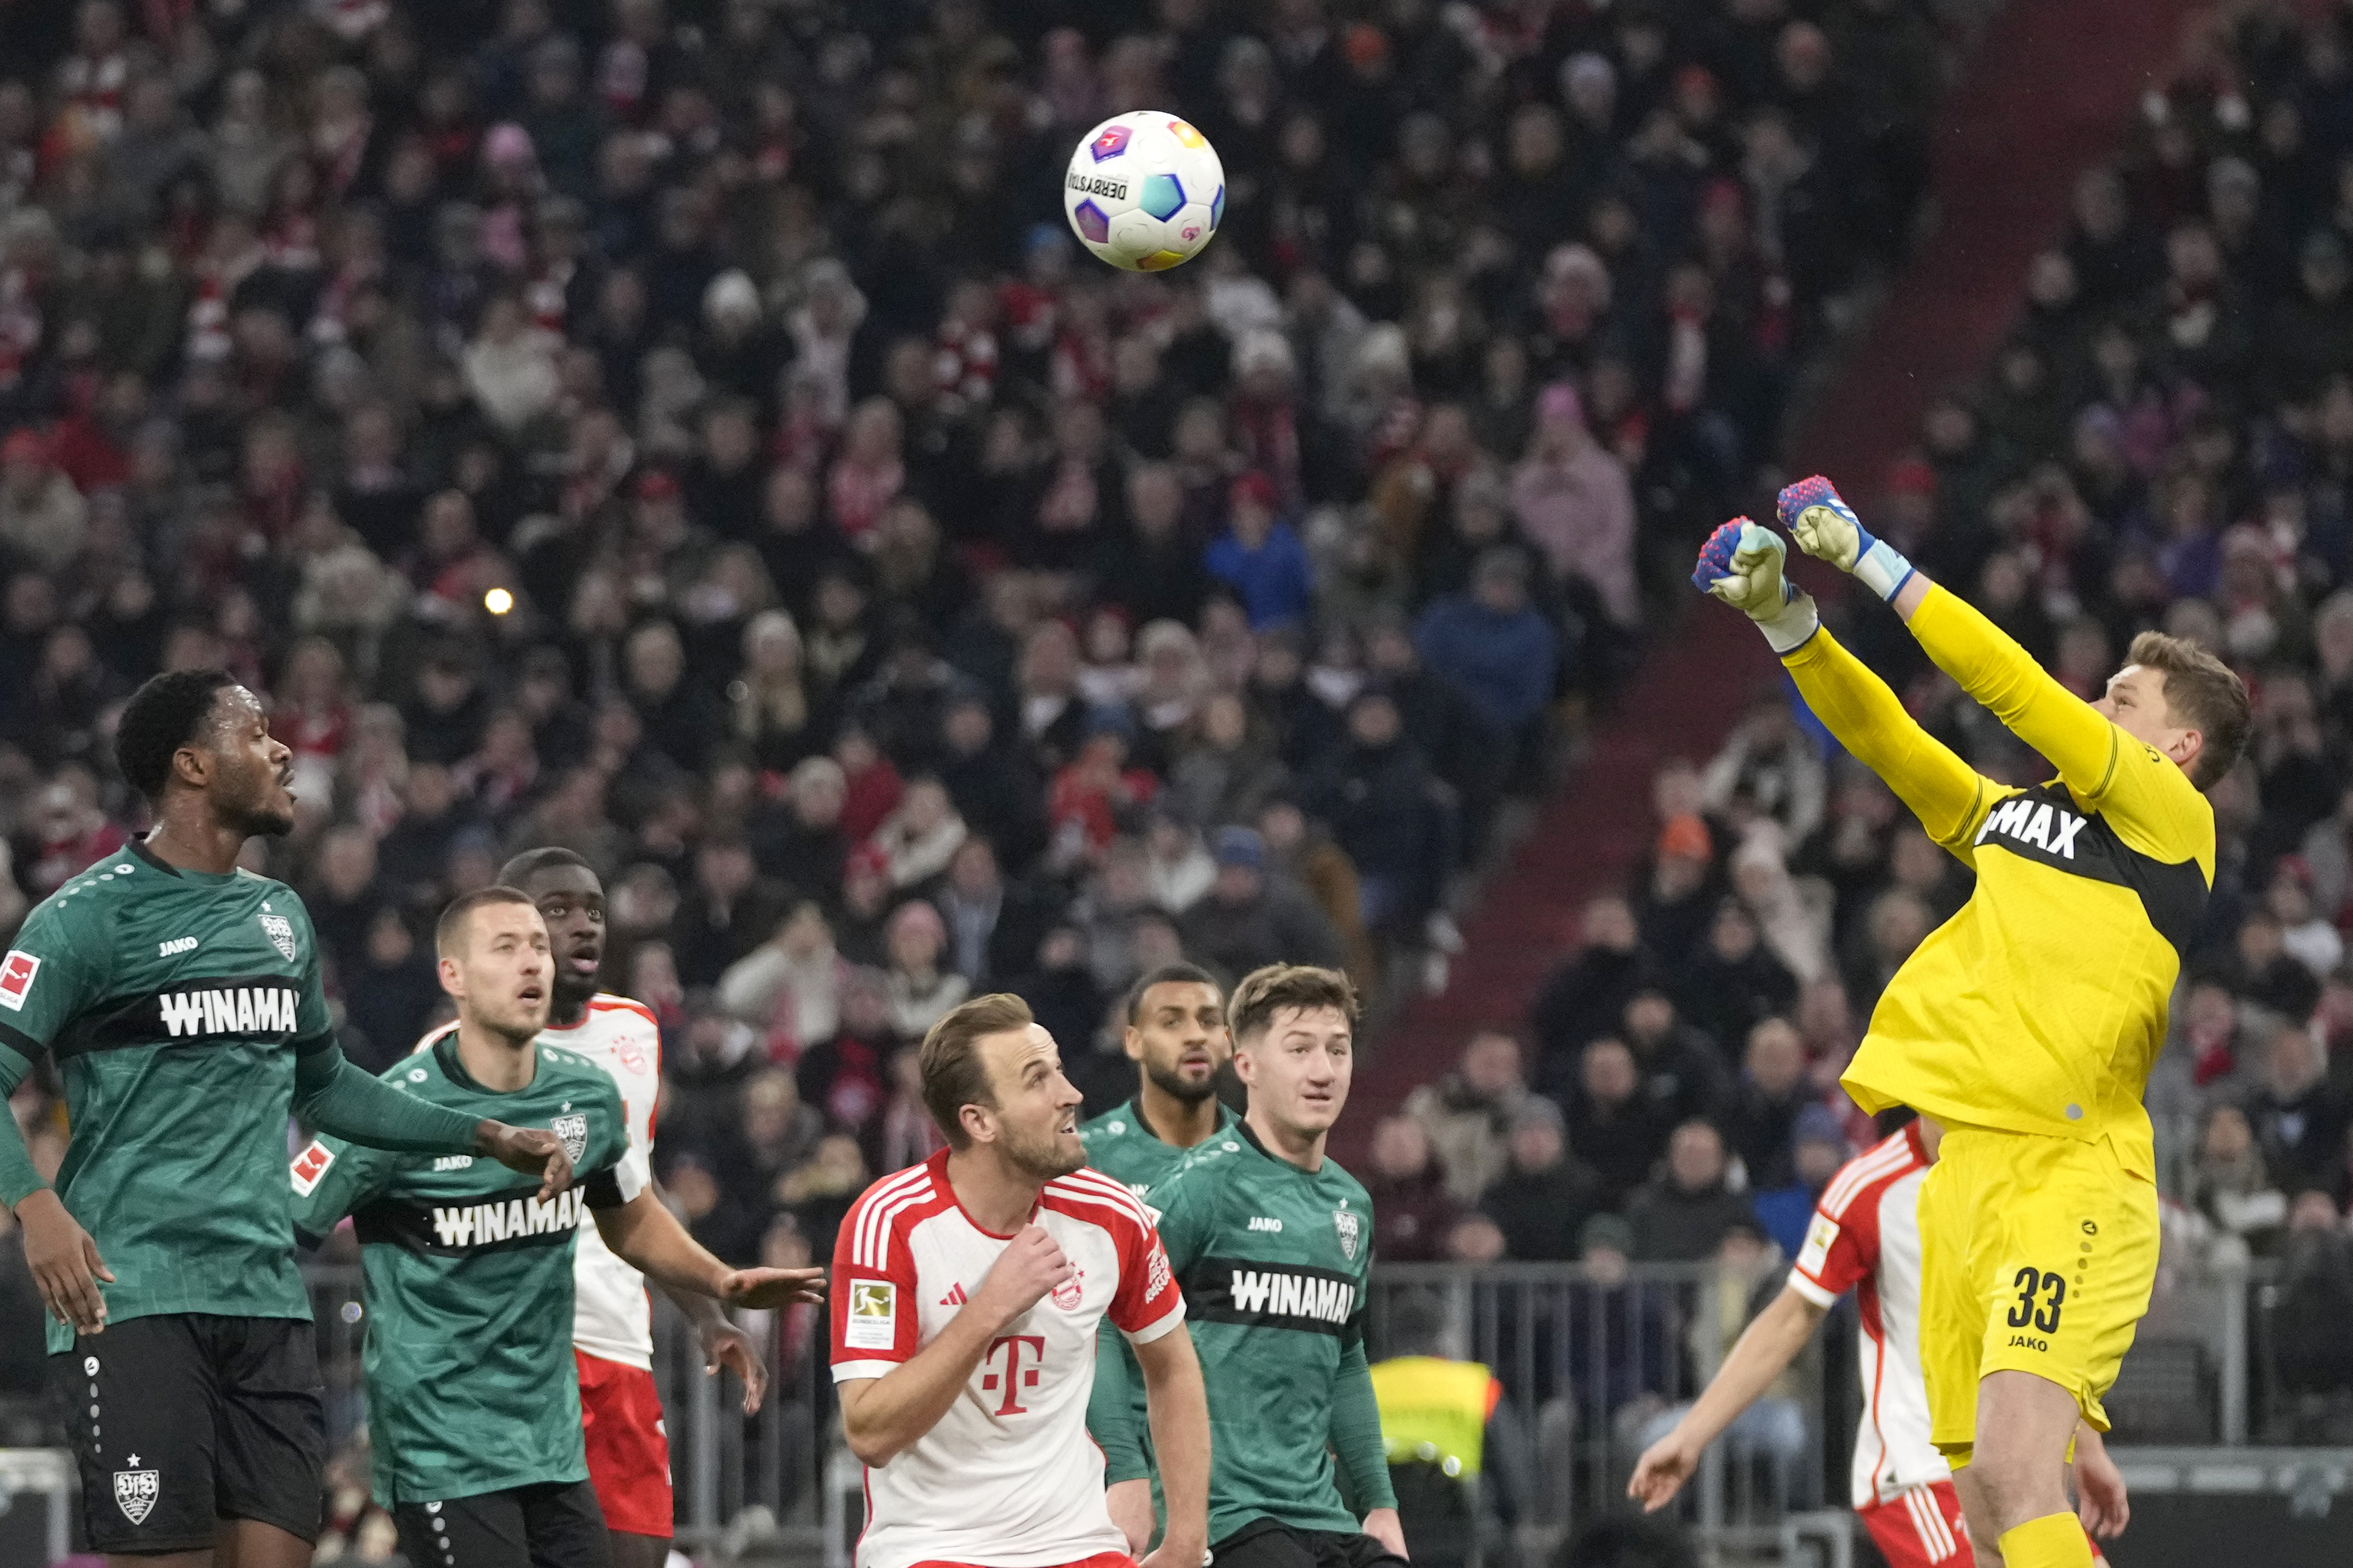 Stuttgart goalkeeper Alexander Nubel made a succession of first-half saves